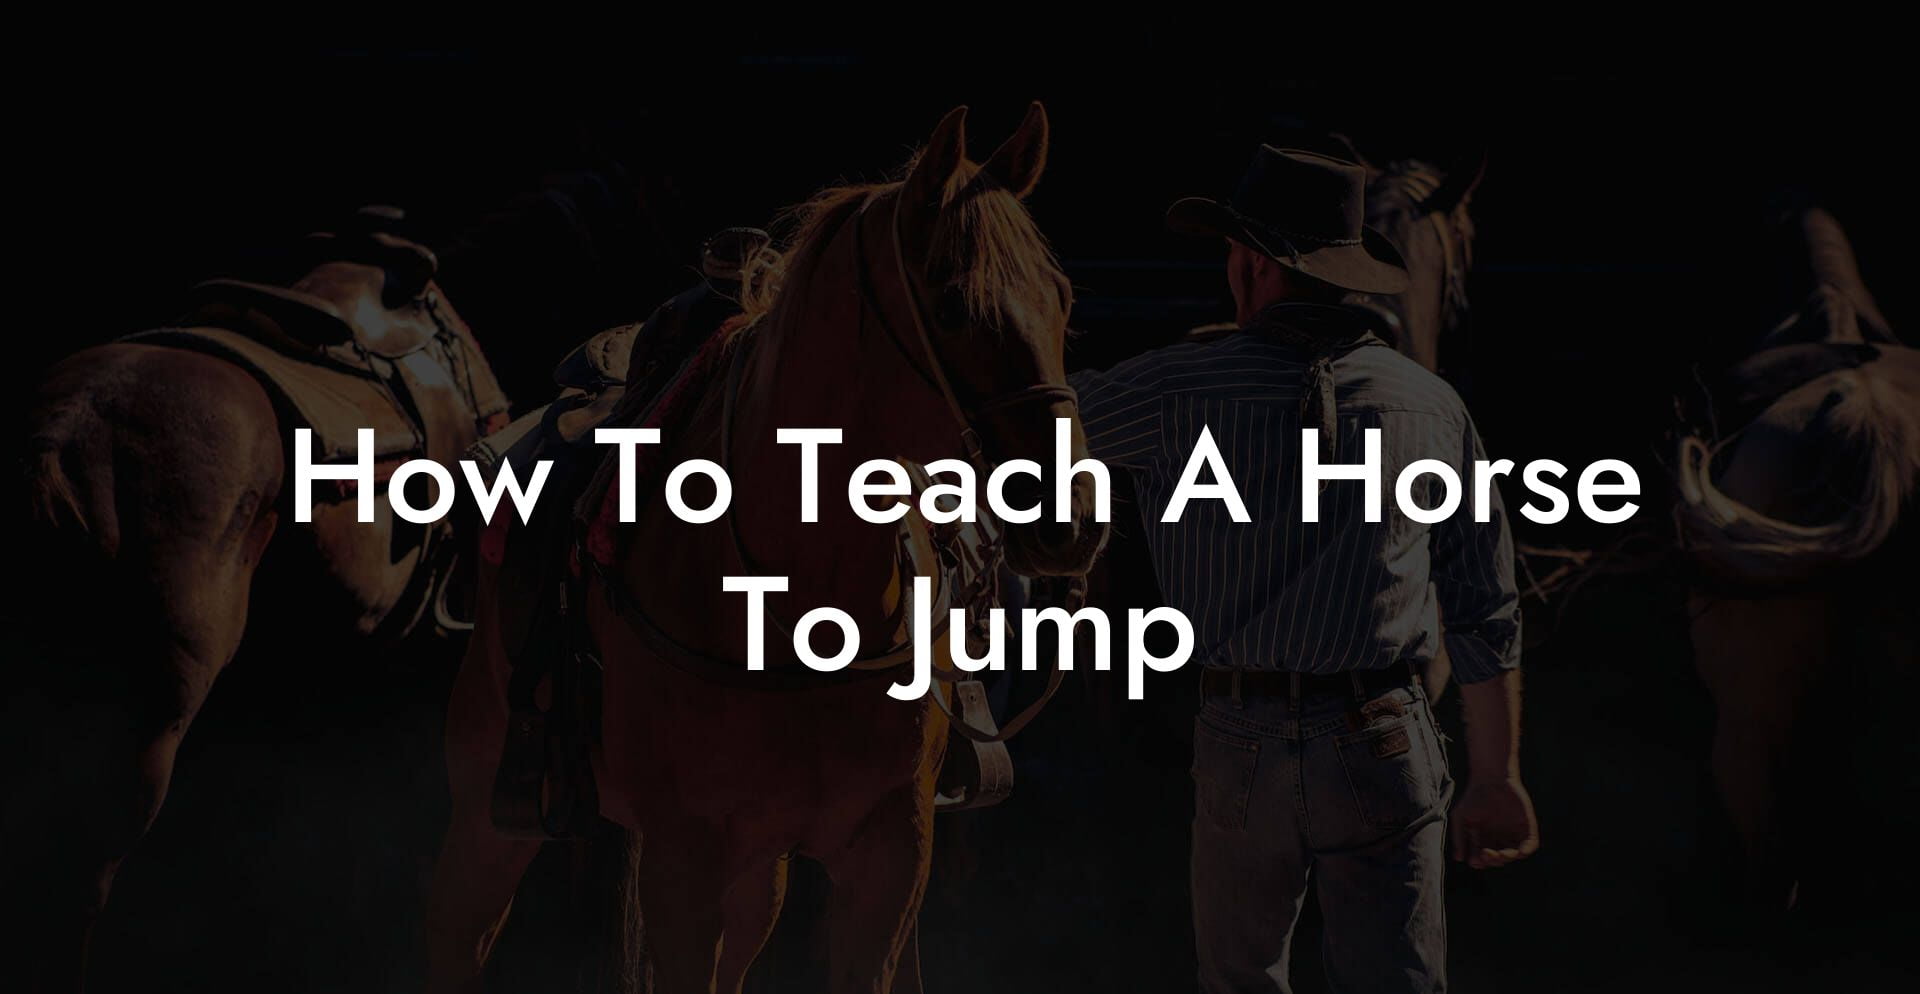 How To Teach A Horse To Jump